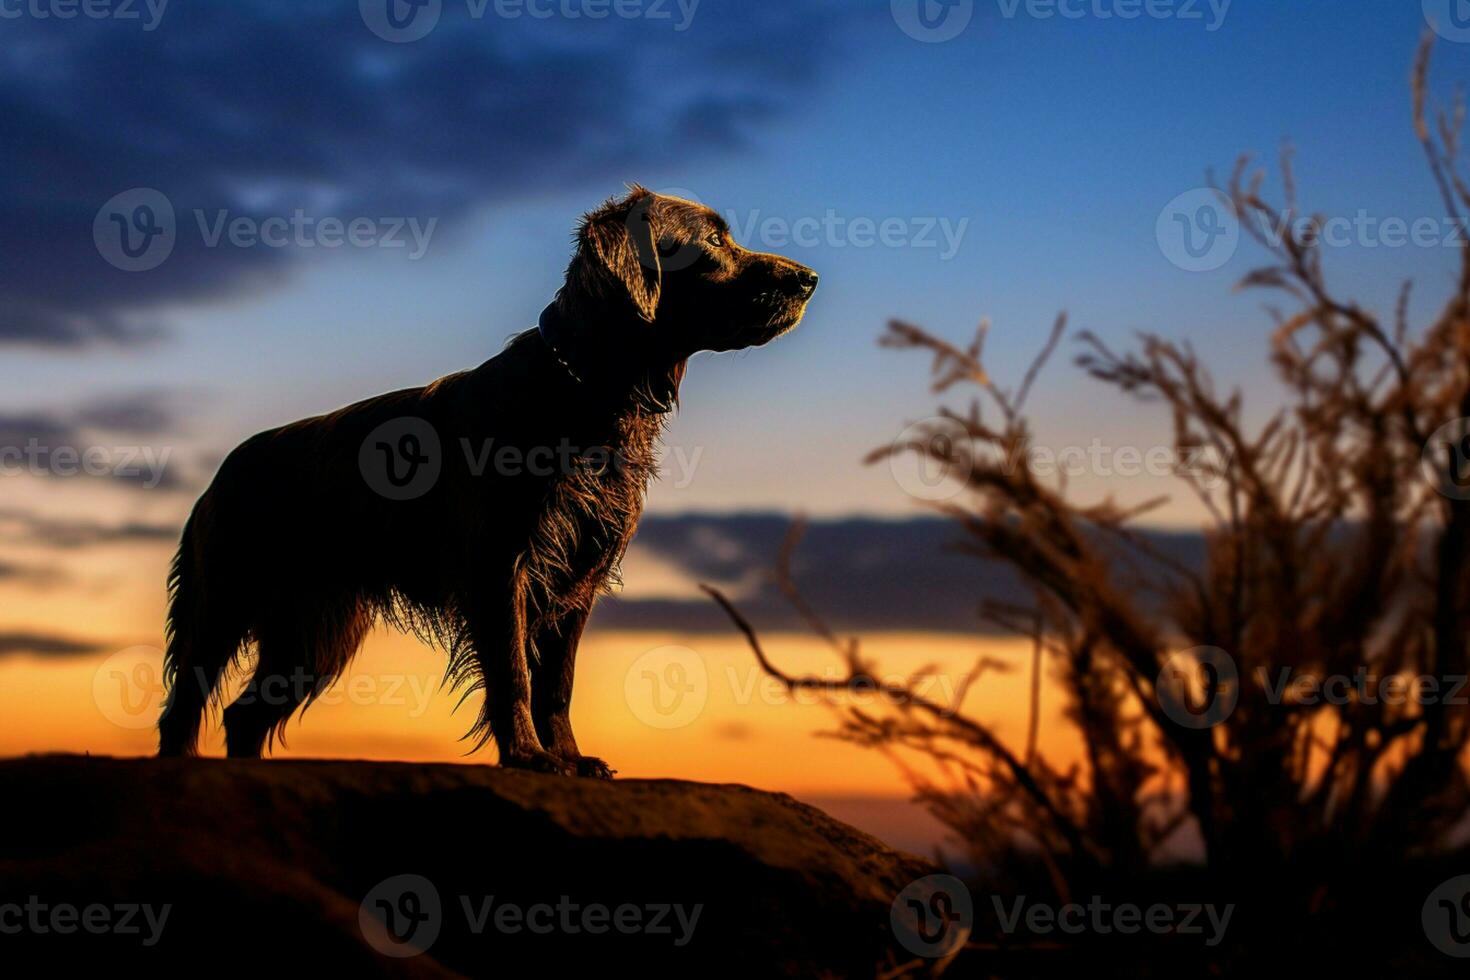 AI generated A canine silhouette against the setting sun creates a picturesque scene photo